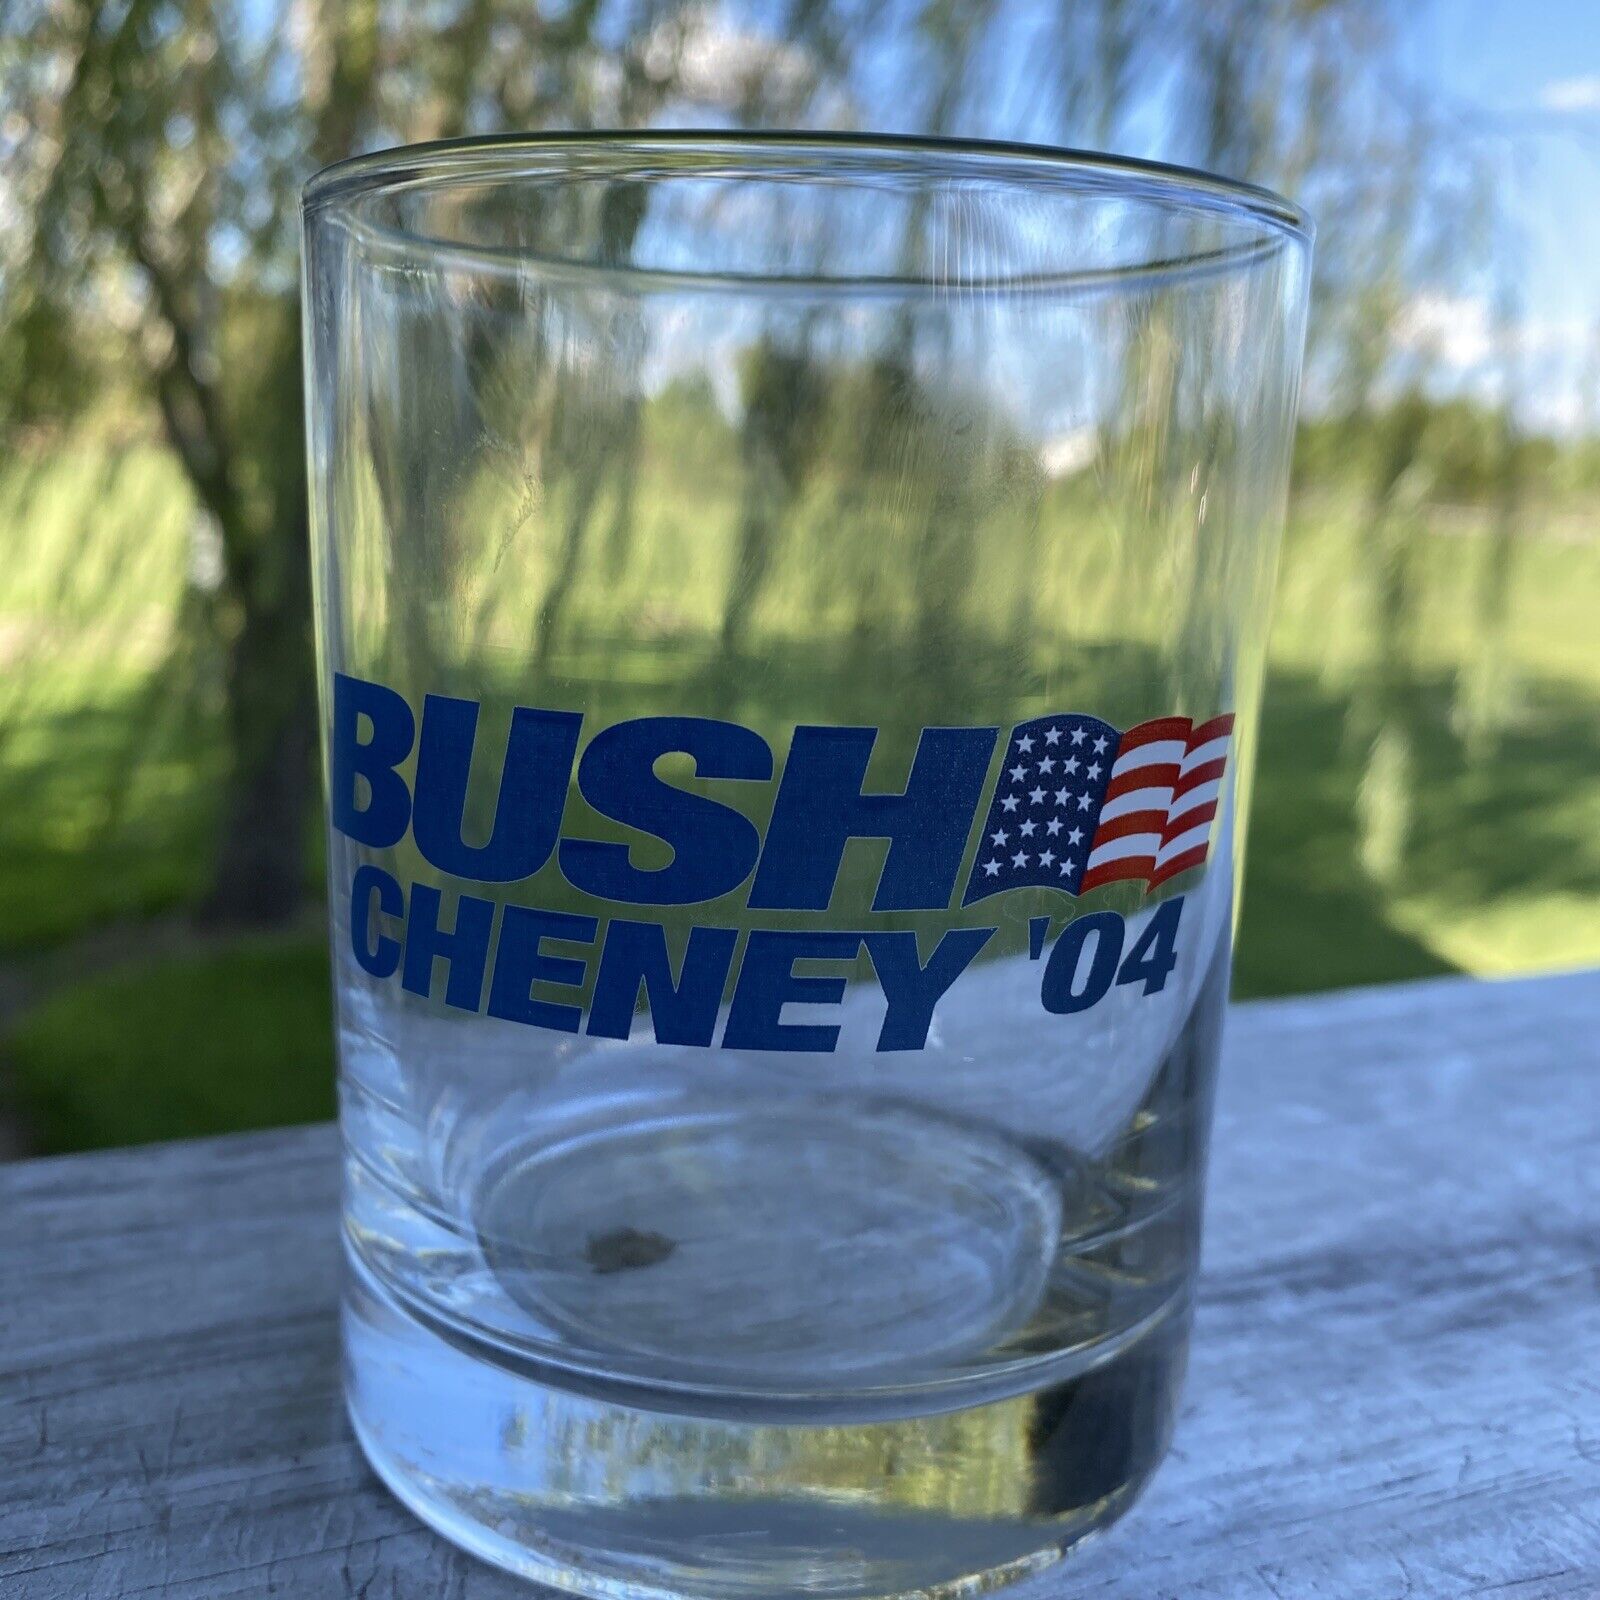 Bush Cheney “04” Glass Presidential Elections 2004